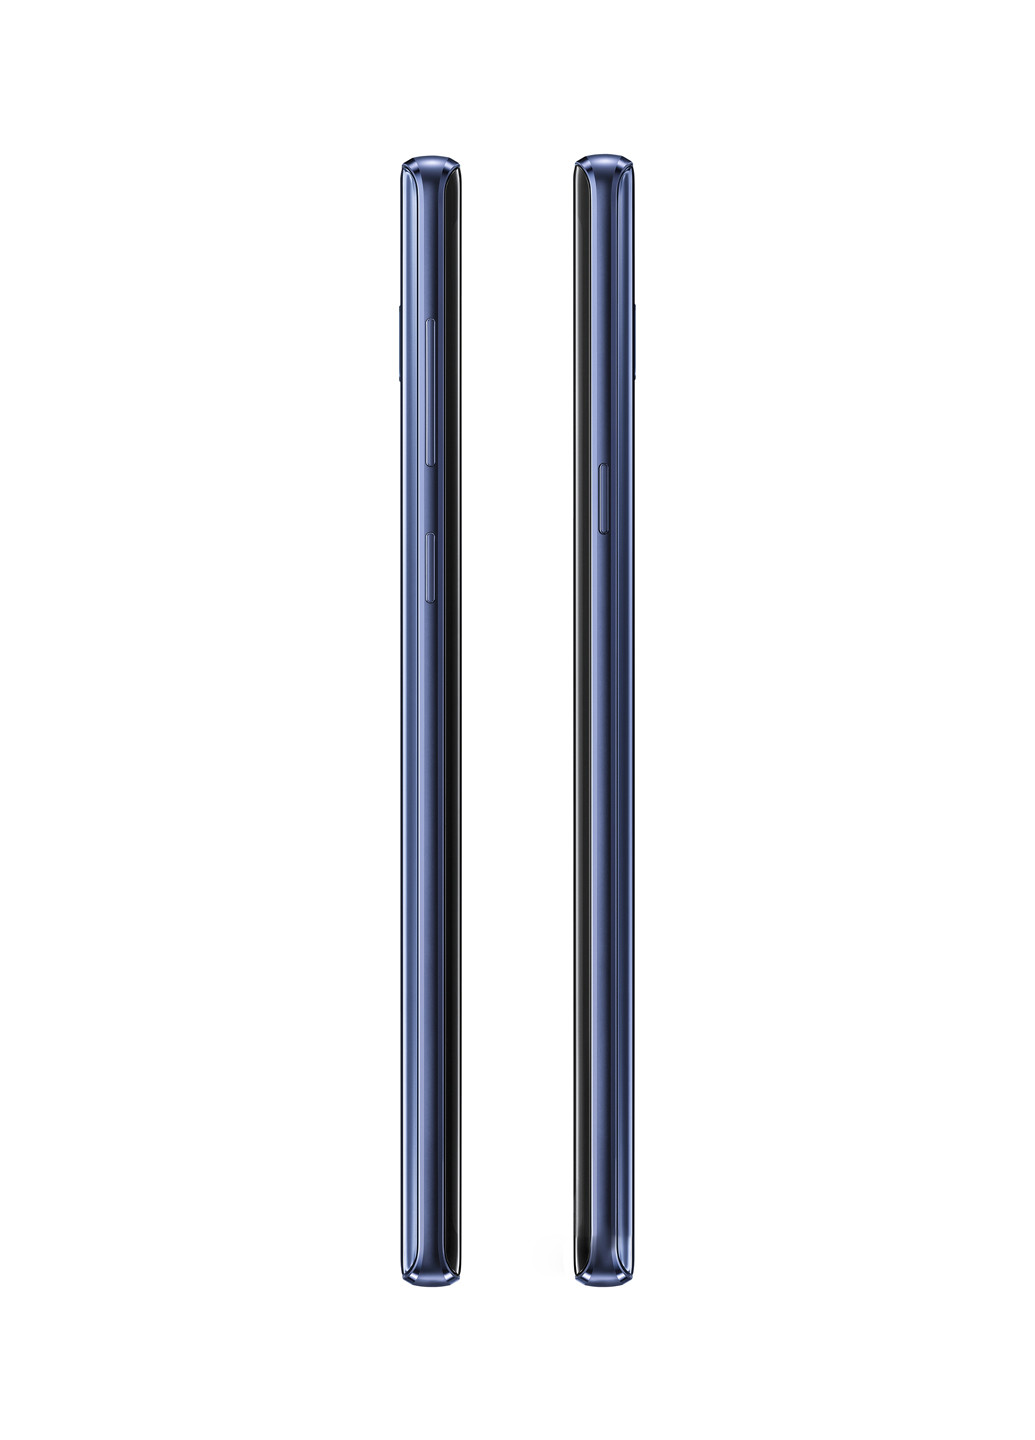 Смартфон Samsung galaxy note 9 6/128gb blue (sm-n960fzbdsek) (130349385)